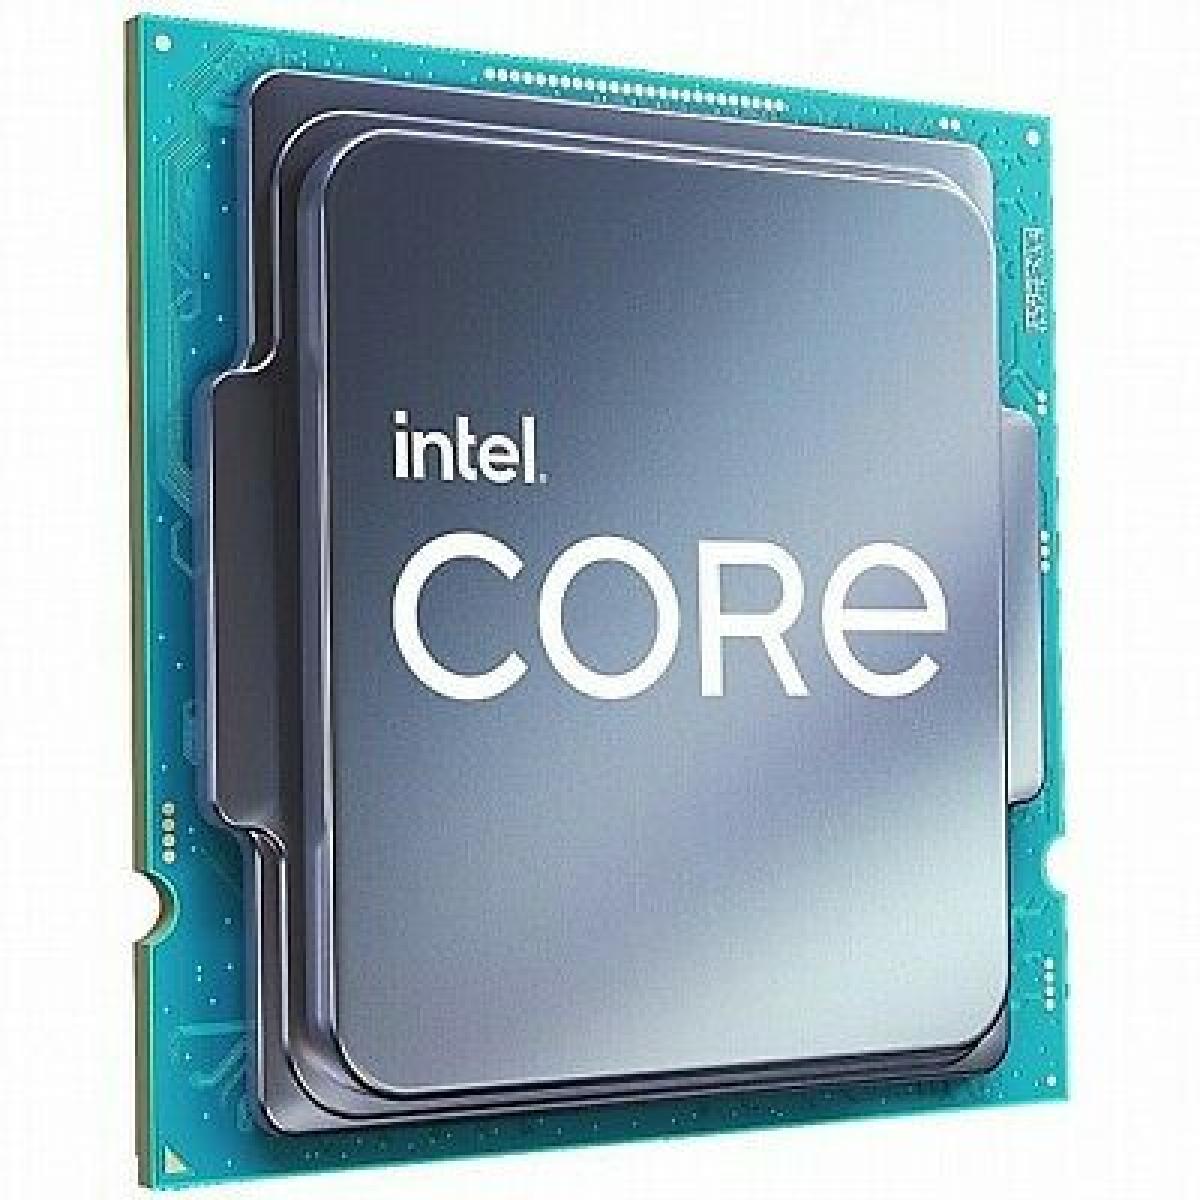 Intel Core i5-10400F 6 Cores 12 Threads Up To 4.3 GHz LGA1200 Desktop Processor (Tray)